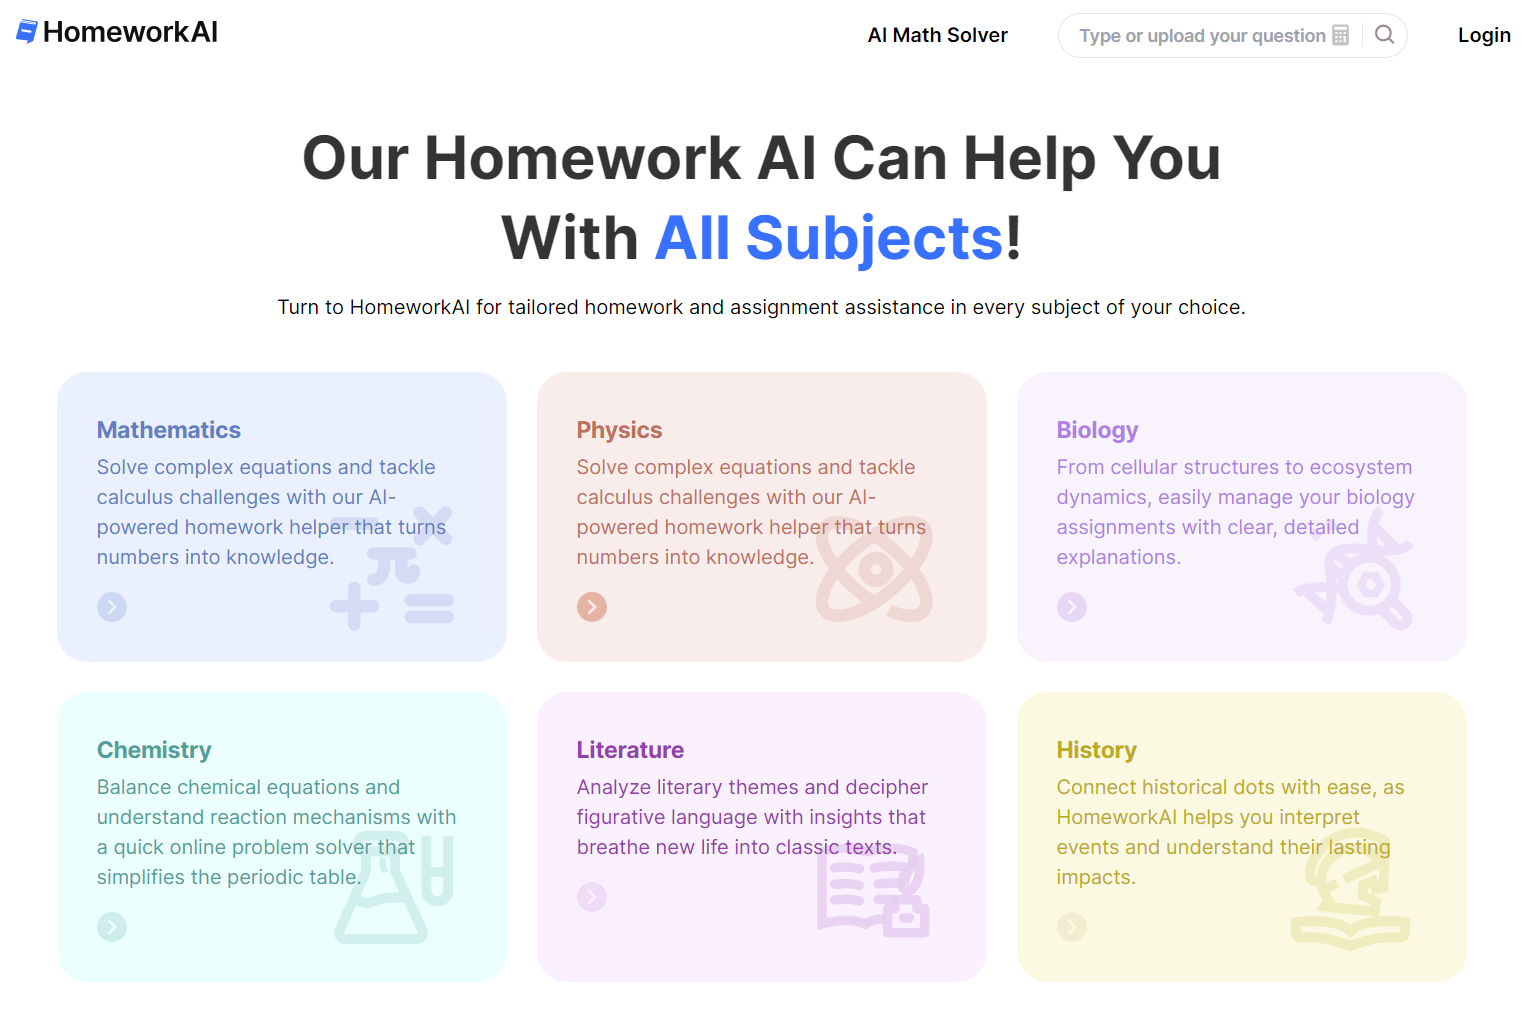 Features that Distinguish Homework AI